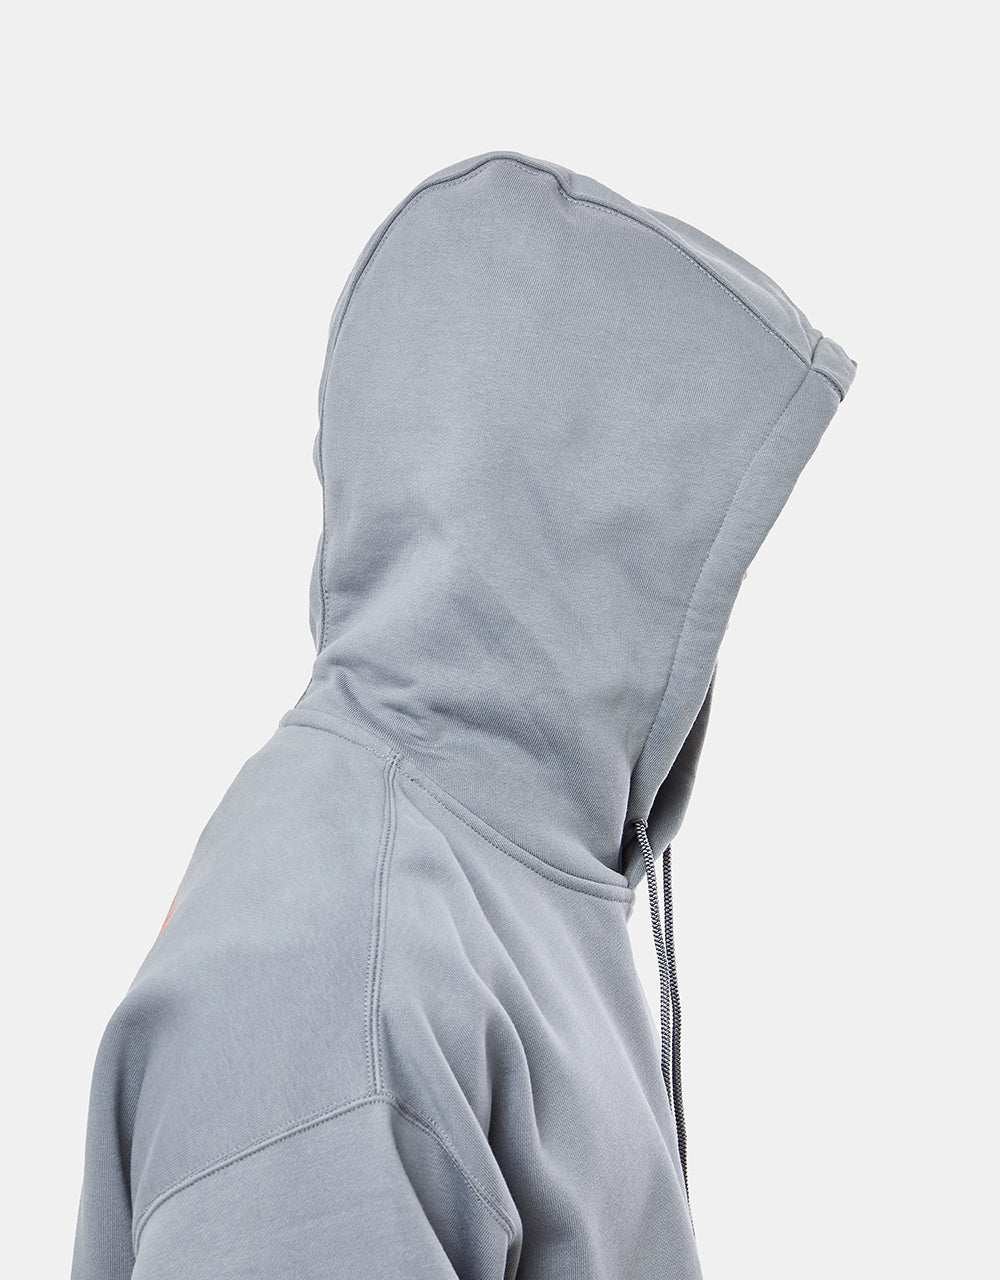 Nike SB Stencil Pullover Hoodie - Smoke Grey